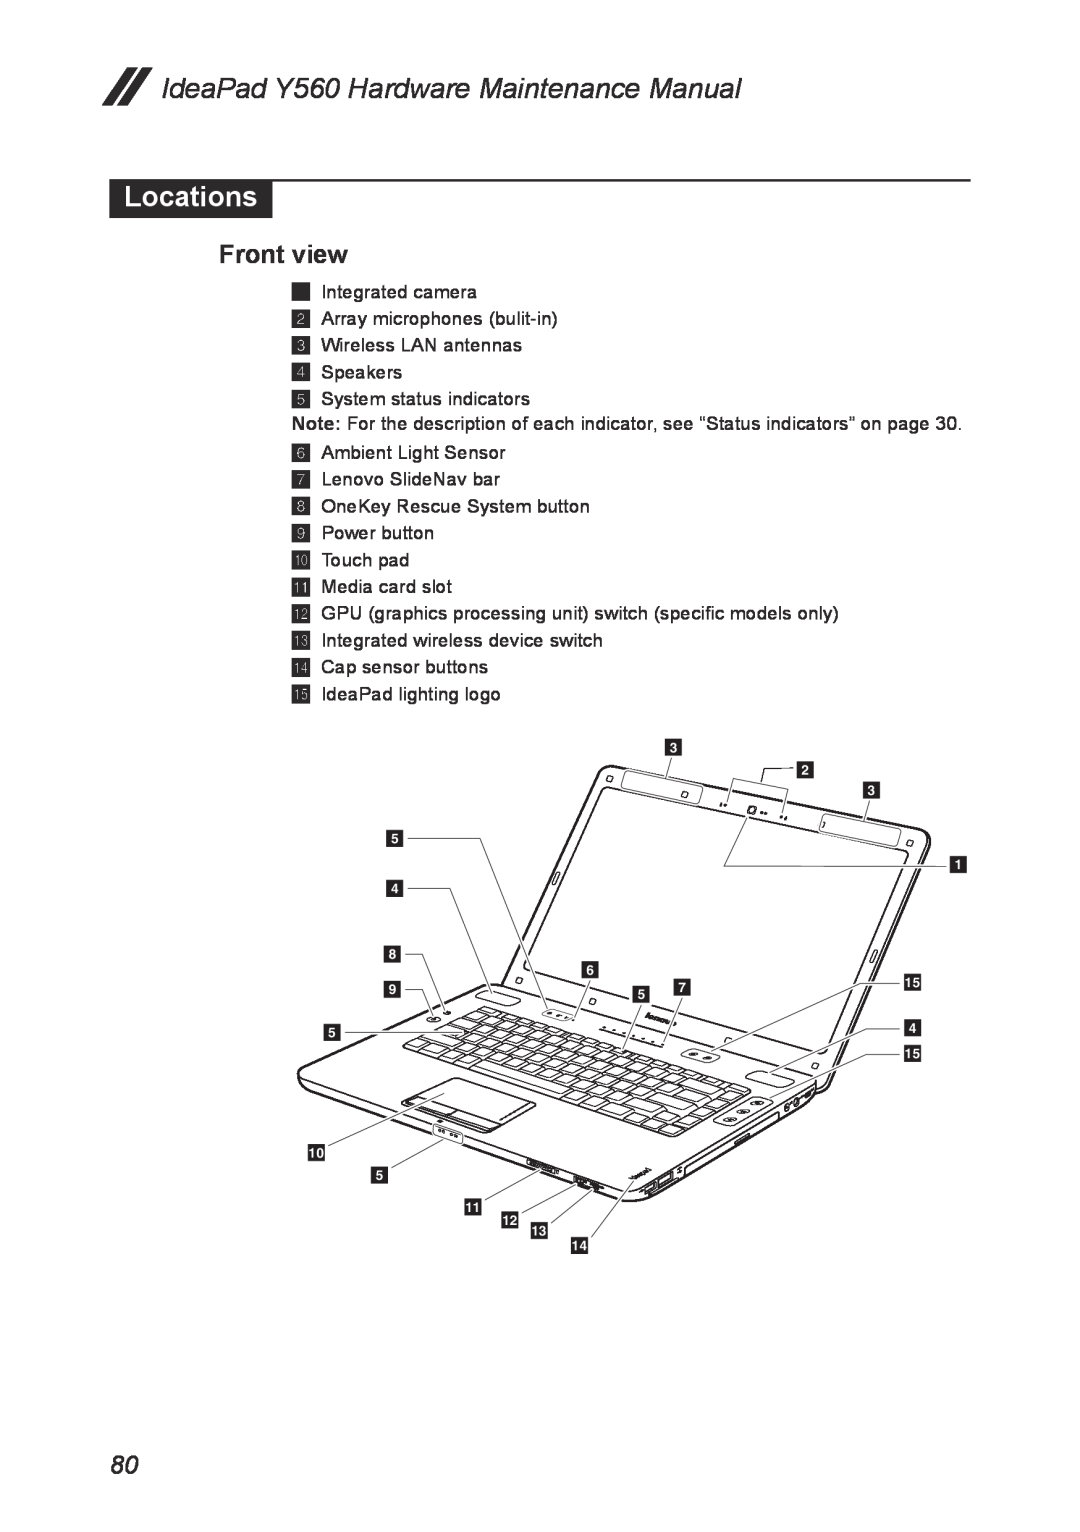 Lenovo manual Locations, Front view, IdeaPad Y560 Hardware Maintenance Manual 